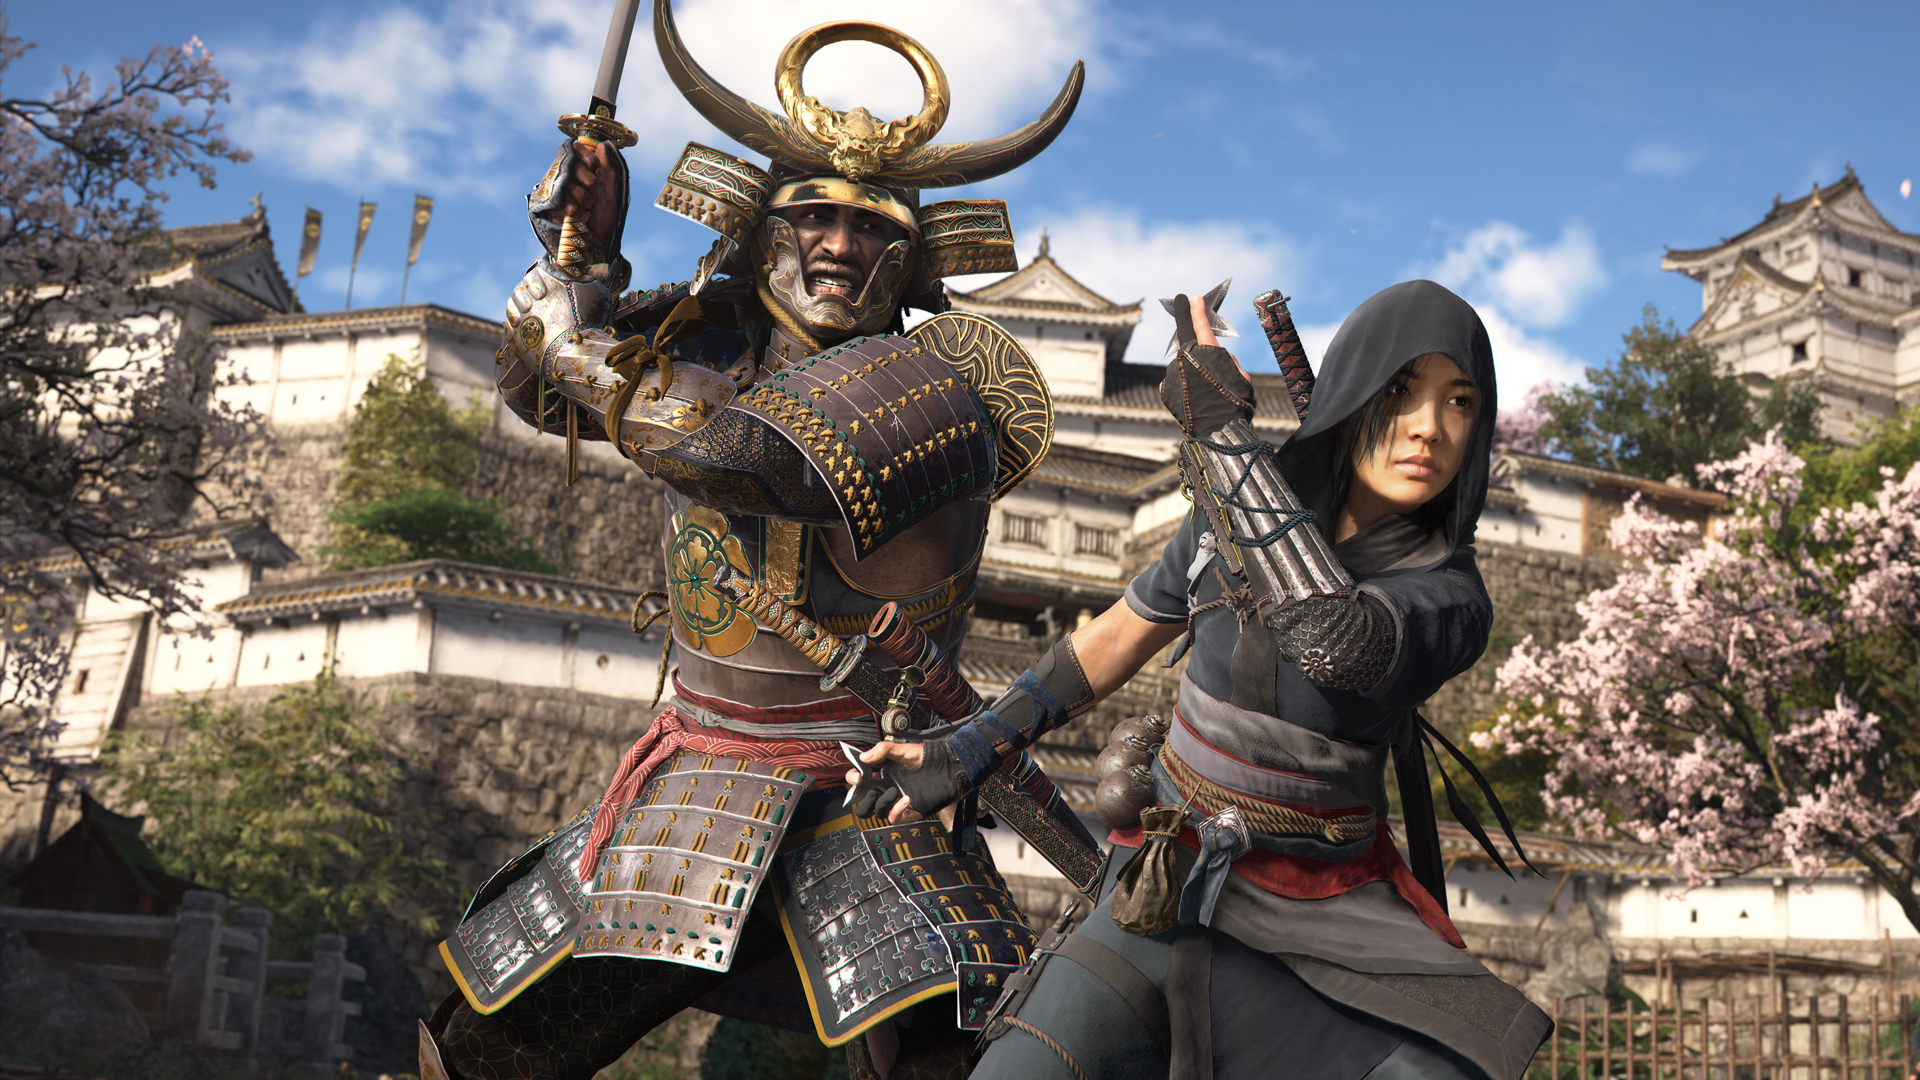 Filmový screenshot ze hry Assassin's Creed Shadows